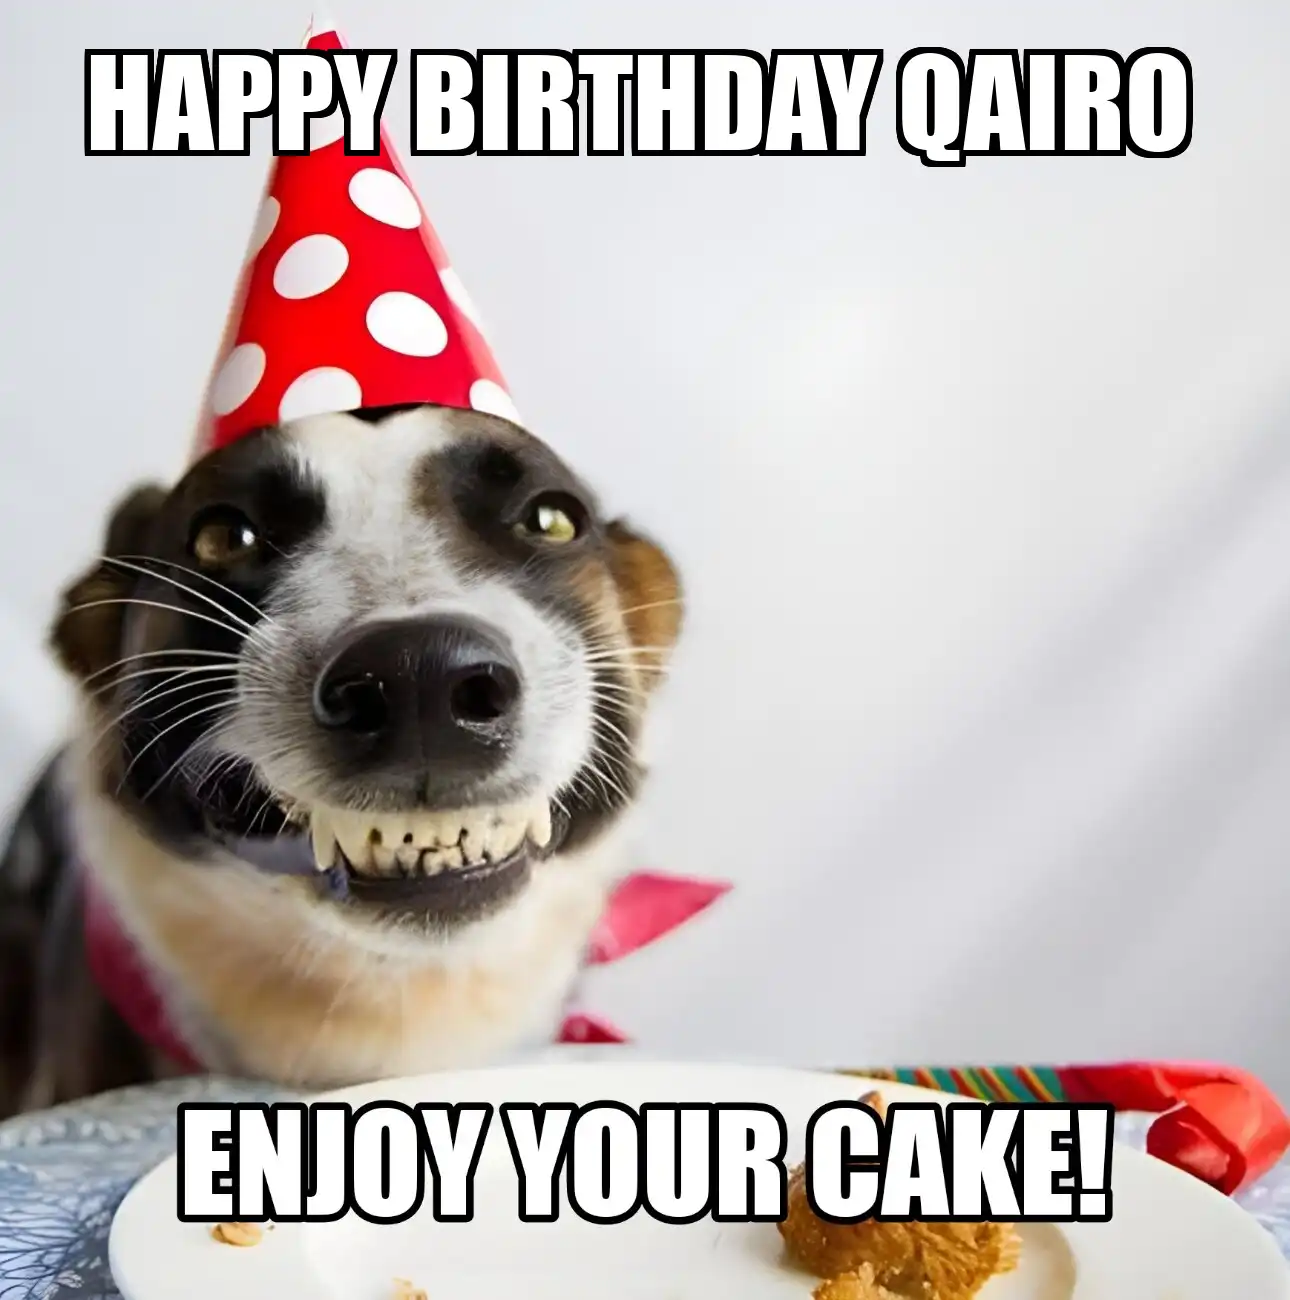 Happy Birthday Qairo Enjoy Your Cake Dog Meme